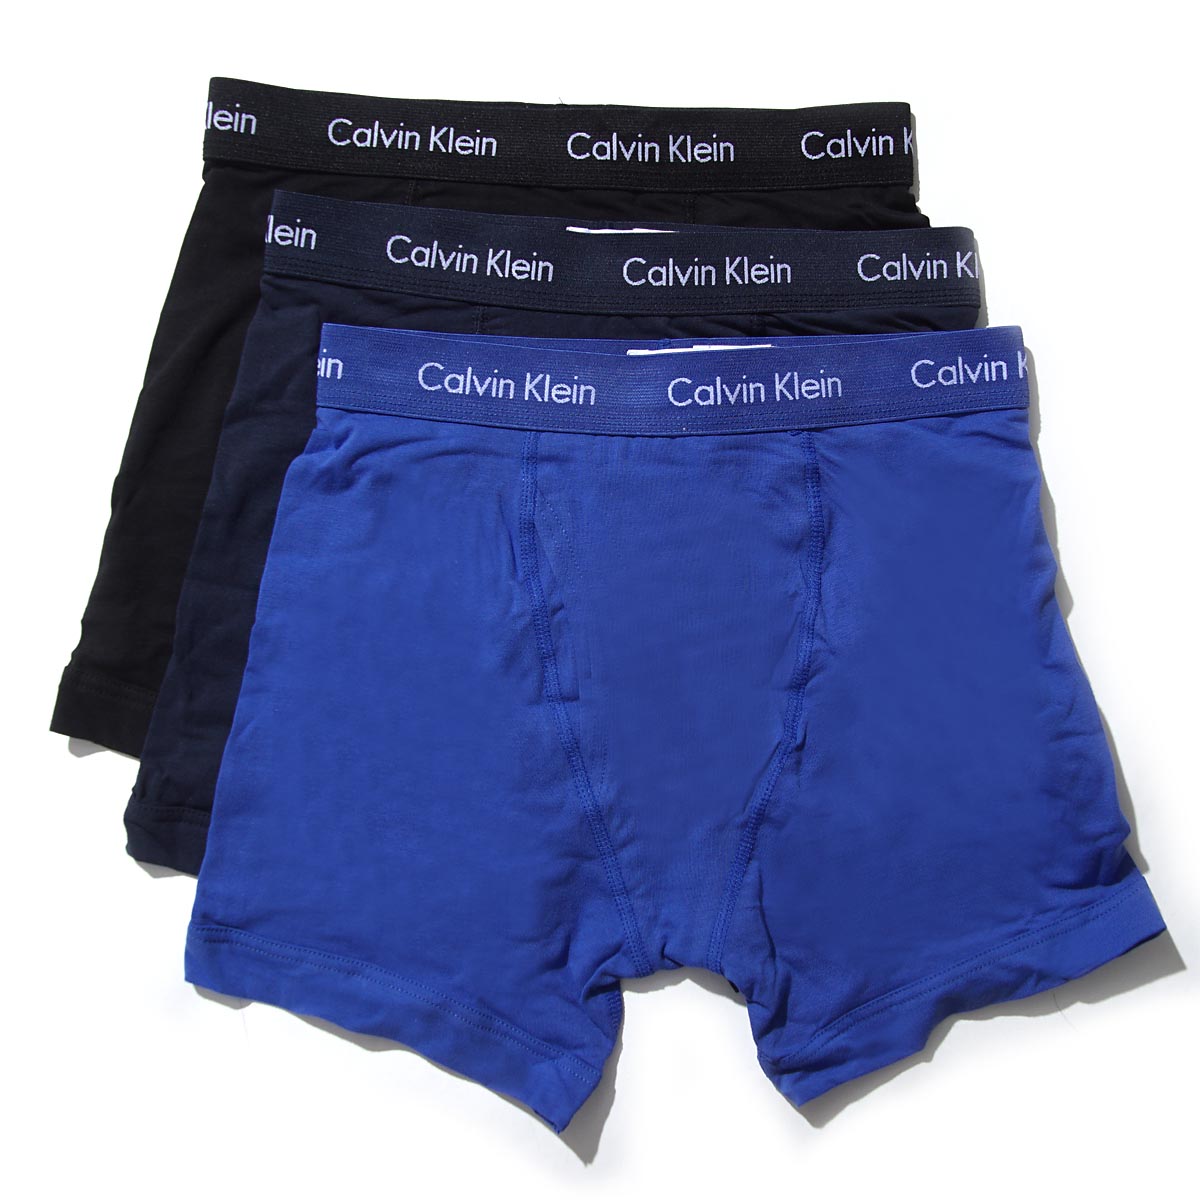 calvin klein boxers blue